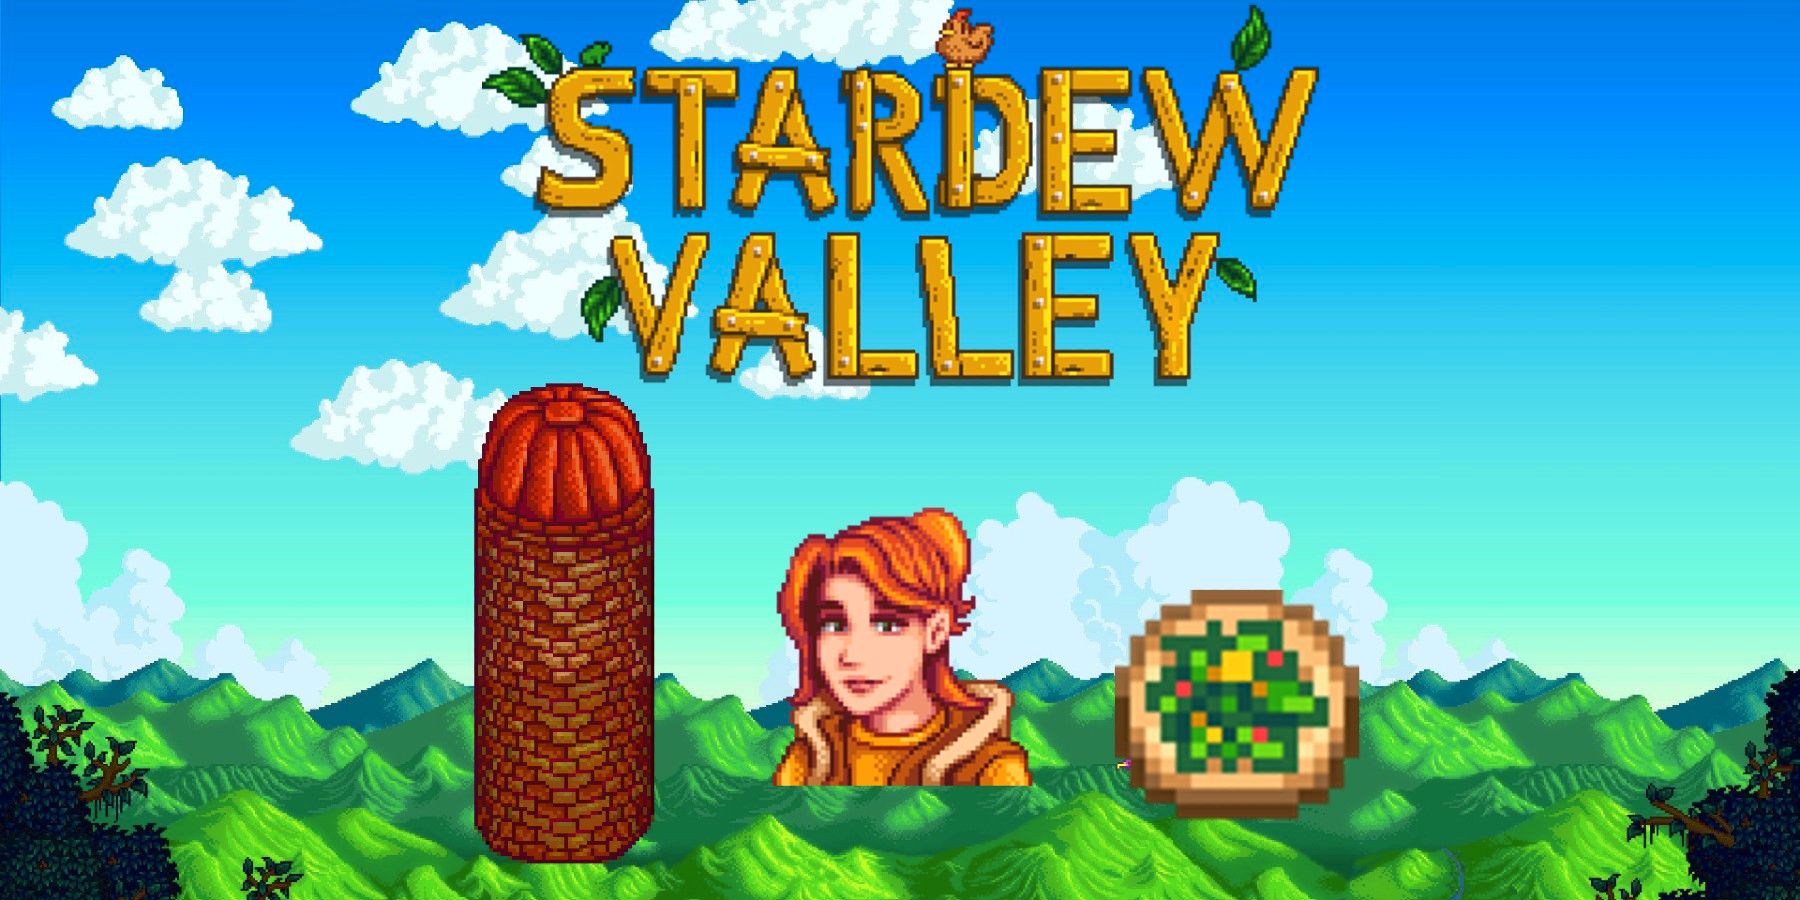 Stardew Valley-video påpekar stora brister i spelets ekonomi